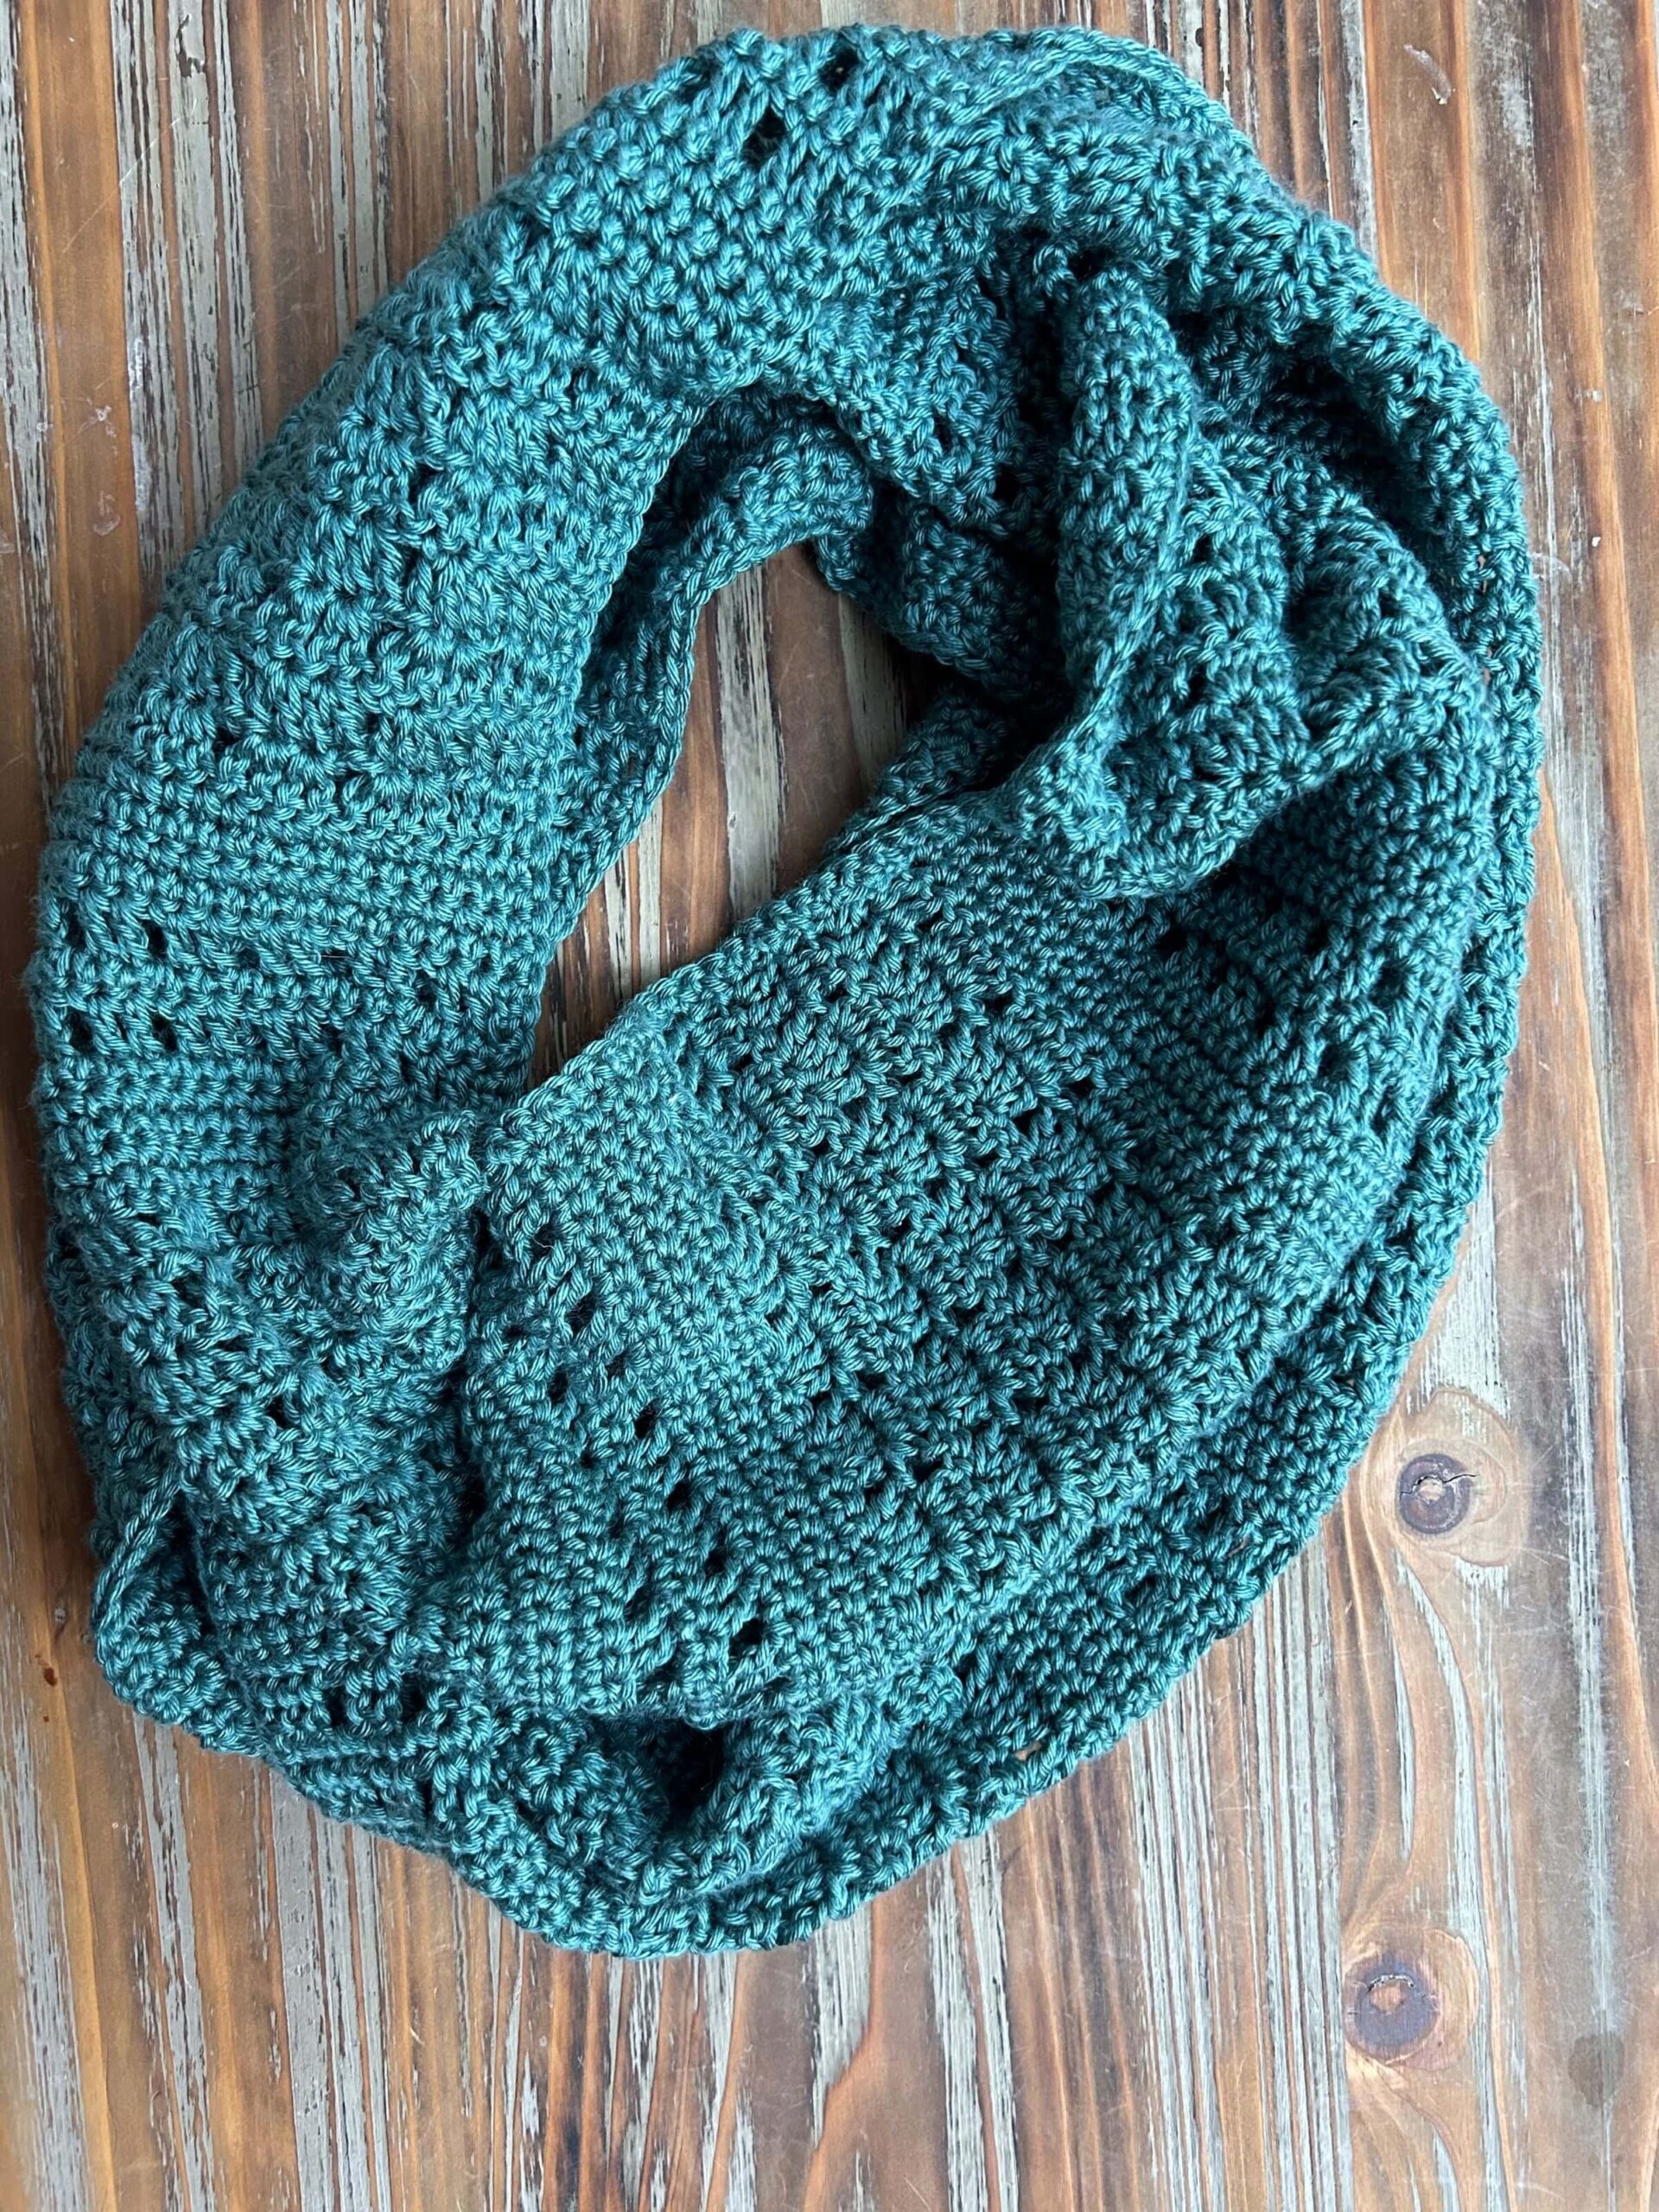 Lightweight crochet infinity scarf on wooden background